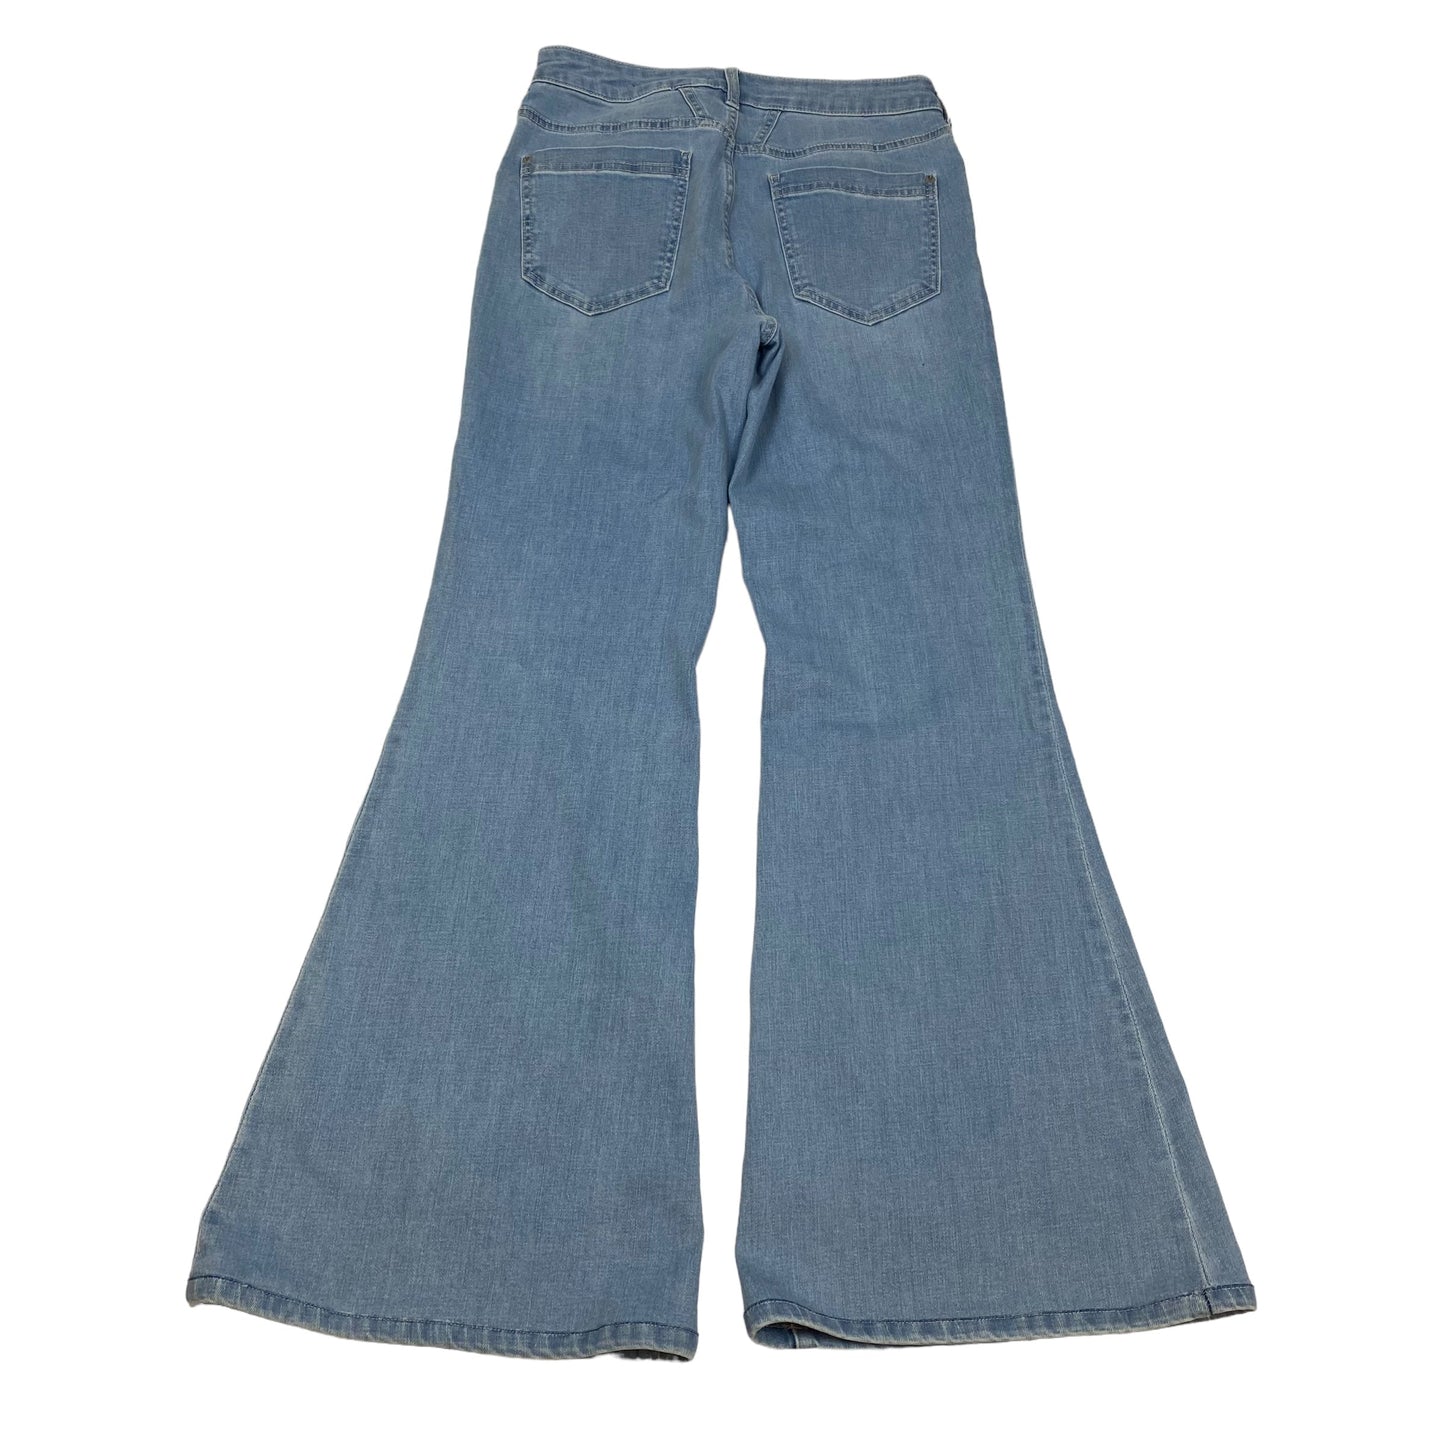 Blue Denim Jeans Flared Pilcro, Size 6